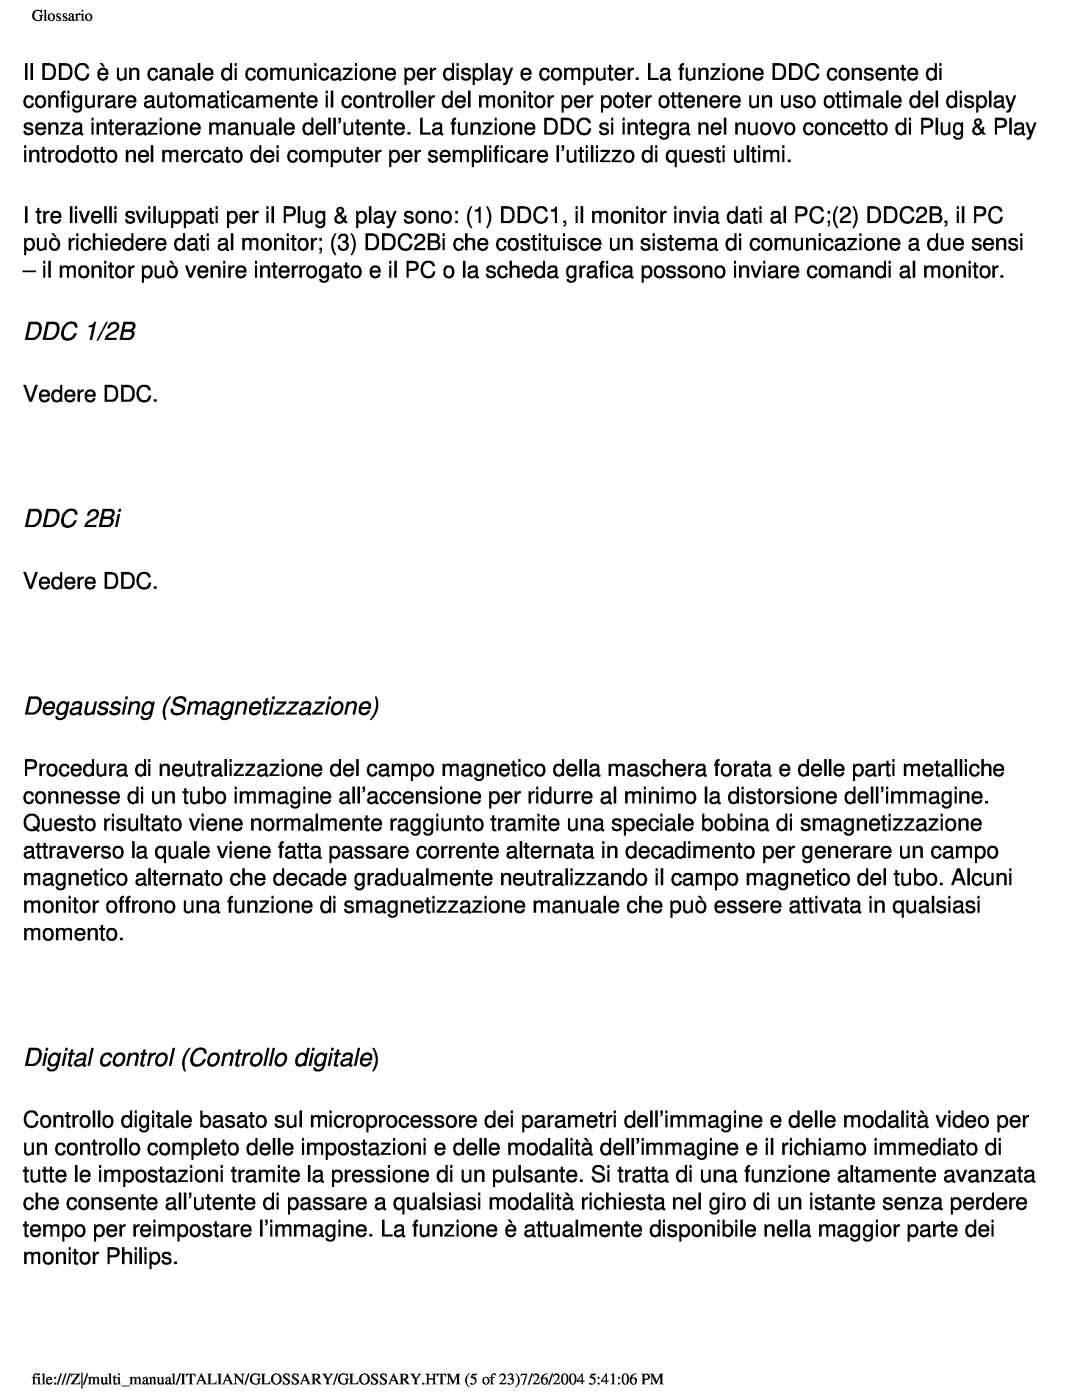 Philips 201B user manual DDC 1/2B, DDC 2Bi, Degaussing Smagnetizzazione, Digital control Controllo digitale 